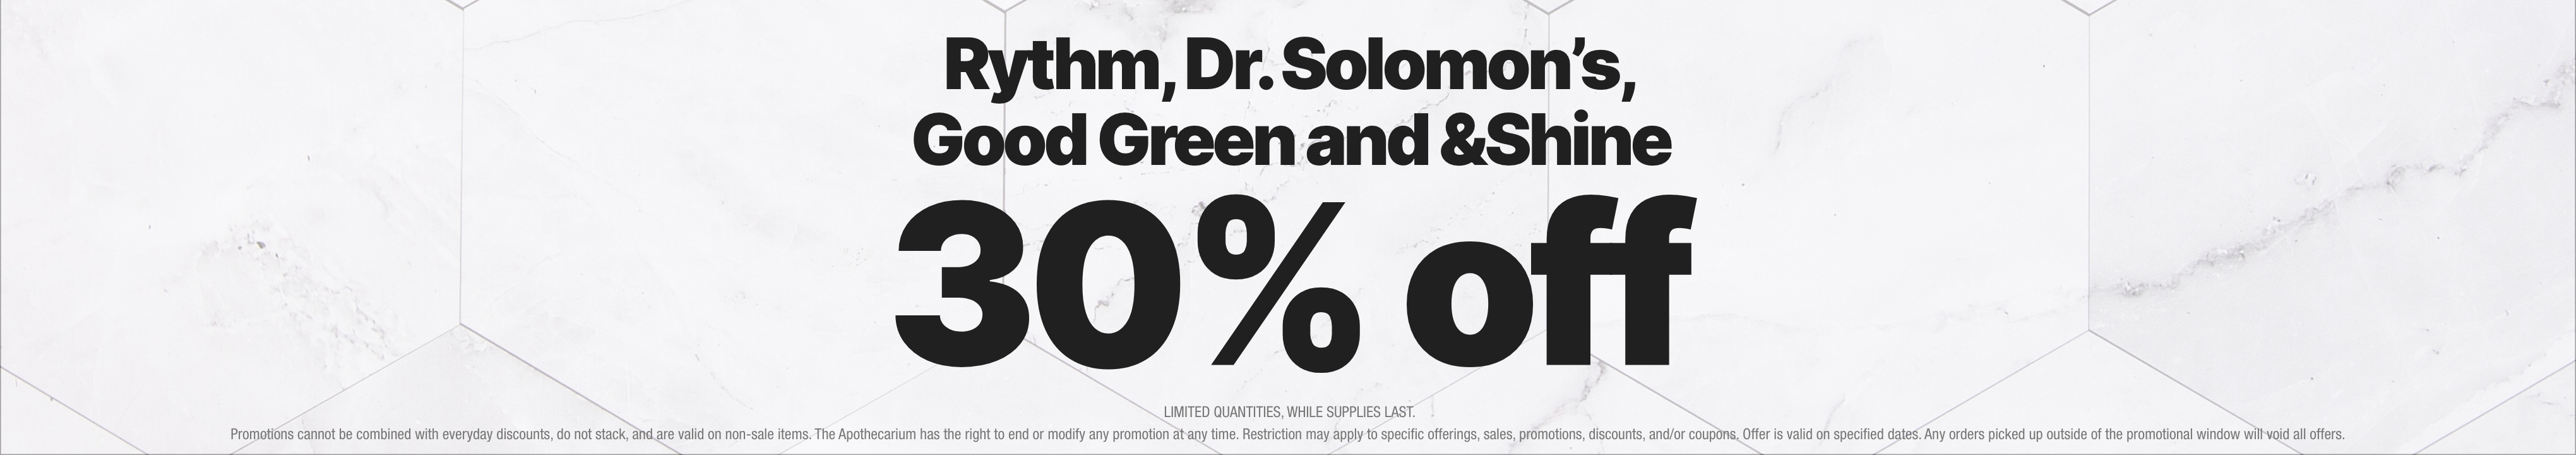 Cannabis Promo, Cannabis Sales, Cannabis Discounts, Cannabis on Sale, 30% Off Rythm, &Shine, Dr. Solomon's, Good Green